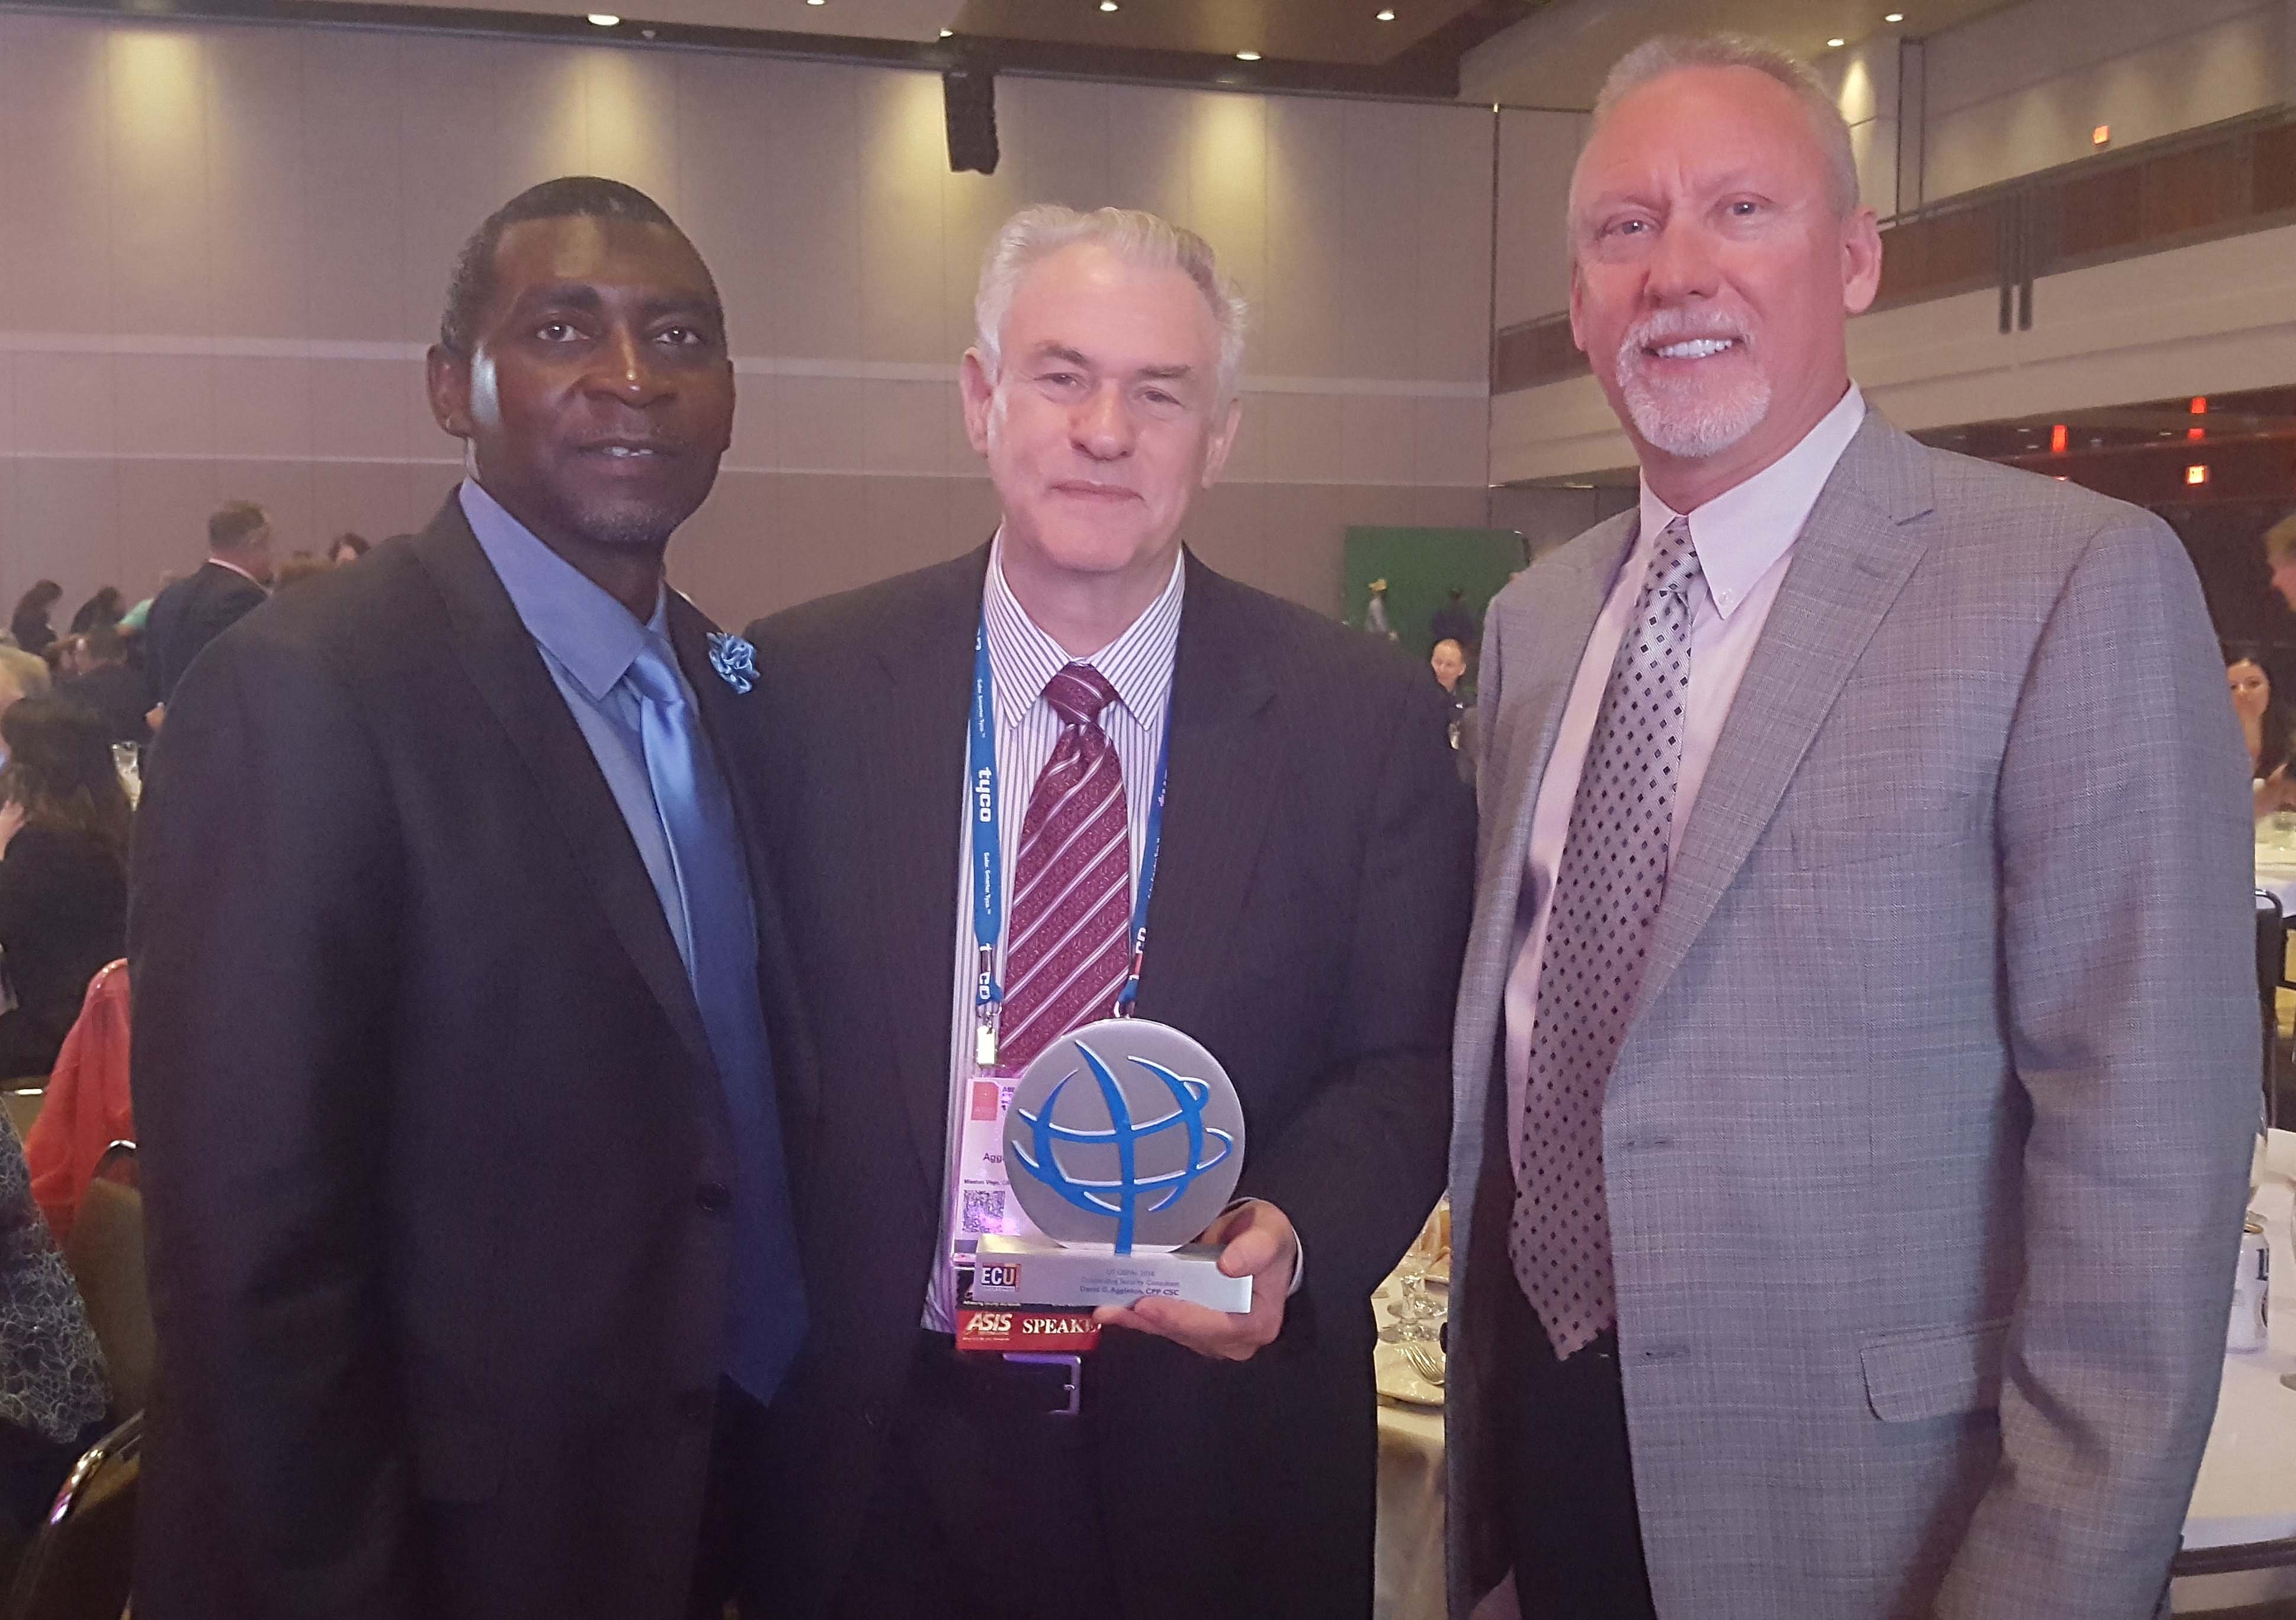 OSPA award winner David Aggleton (center) with IAPSC President Harold Gillens (left) and IAPSC member and OSPA finalist Pete Van Beek at the 2016 U.S. awards ceremony in Orlando.